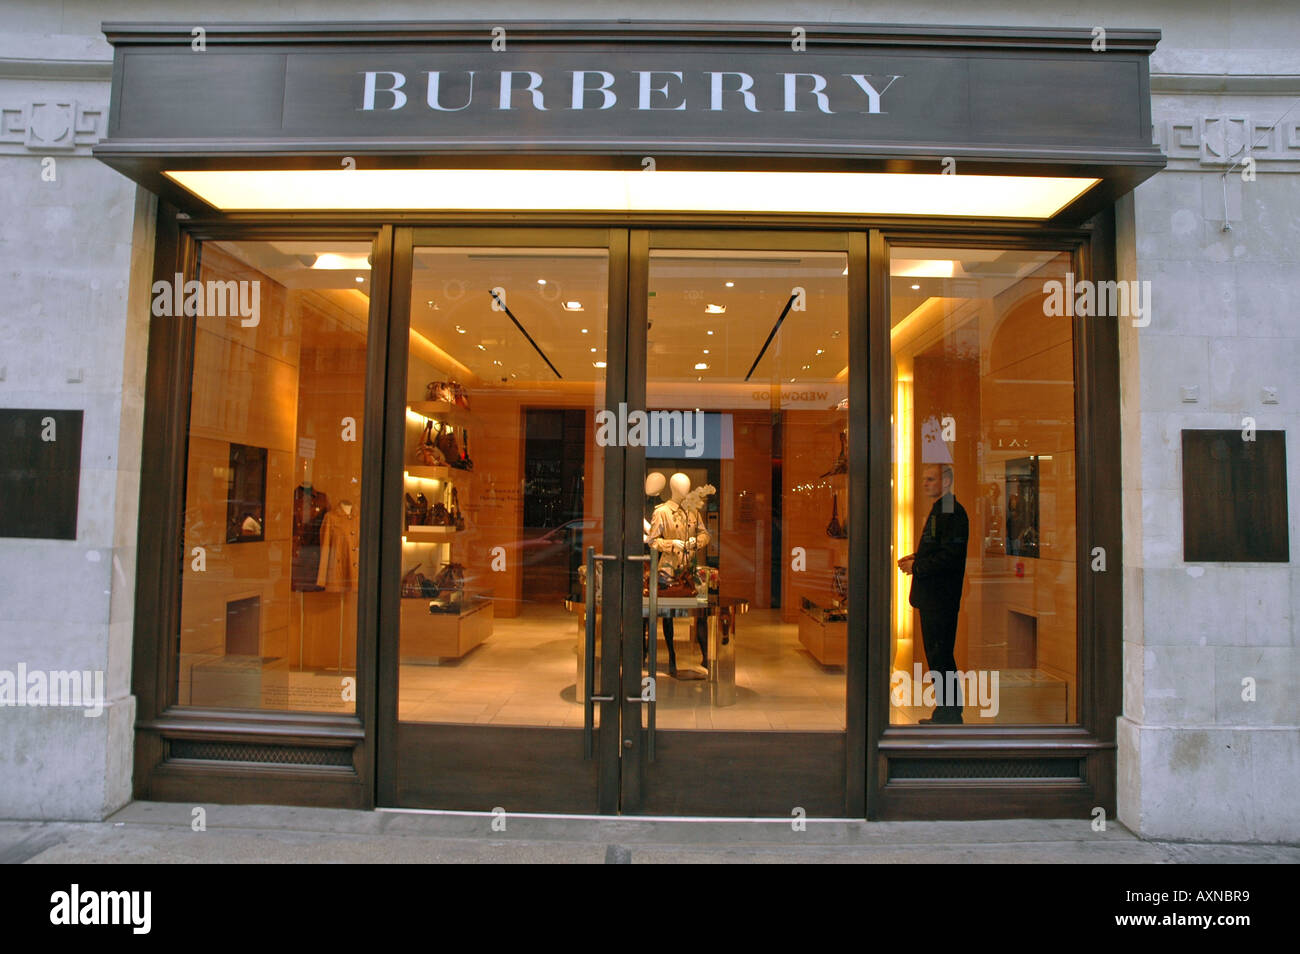 burberry shop on line